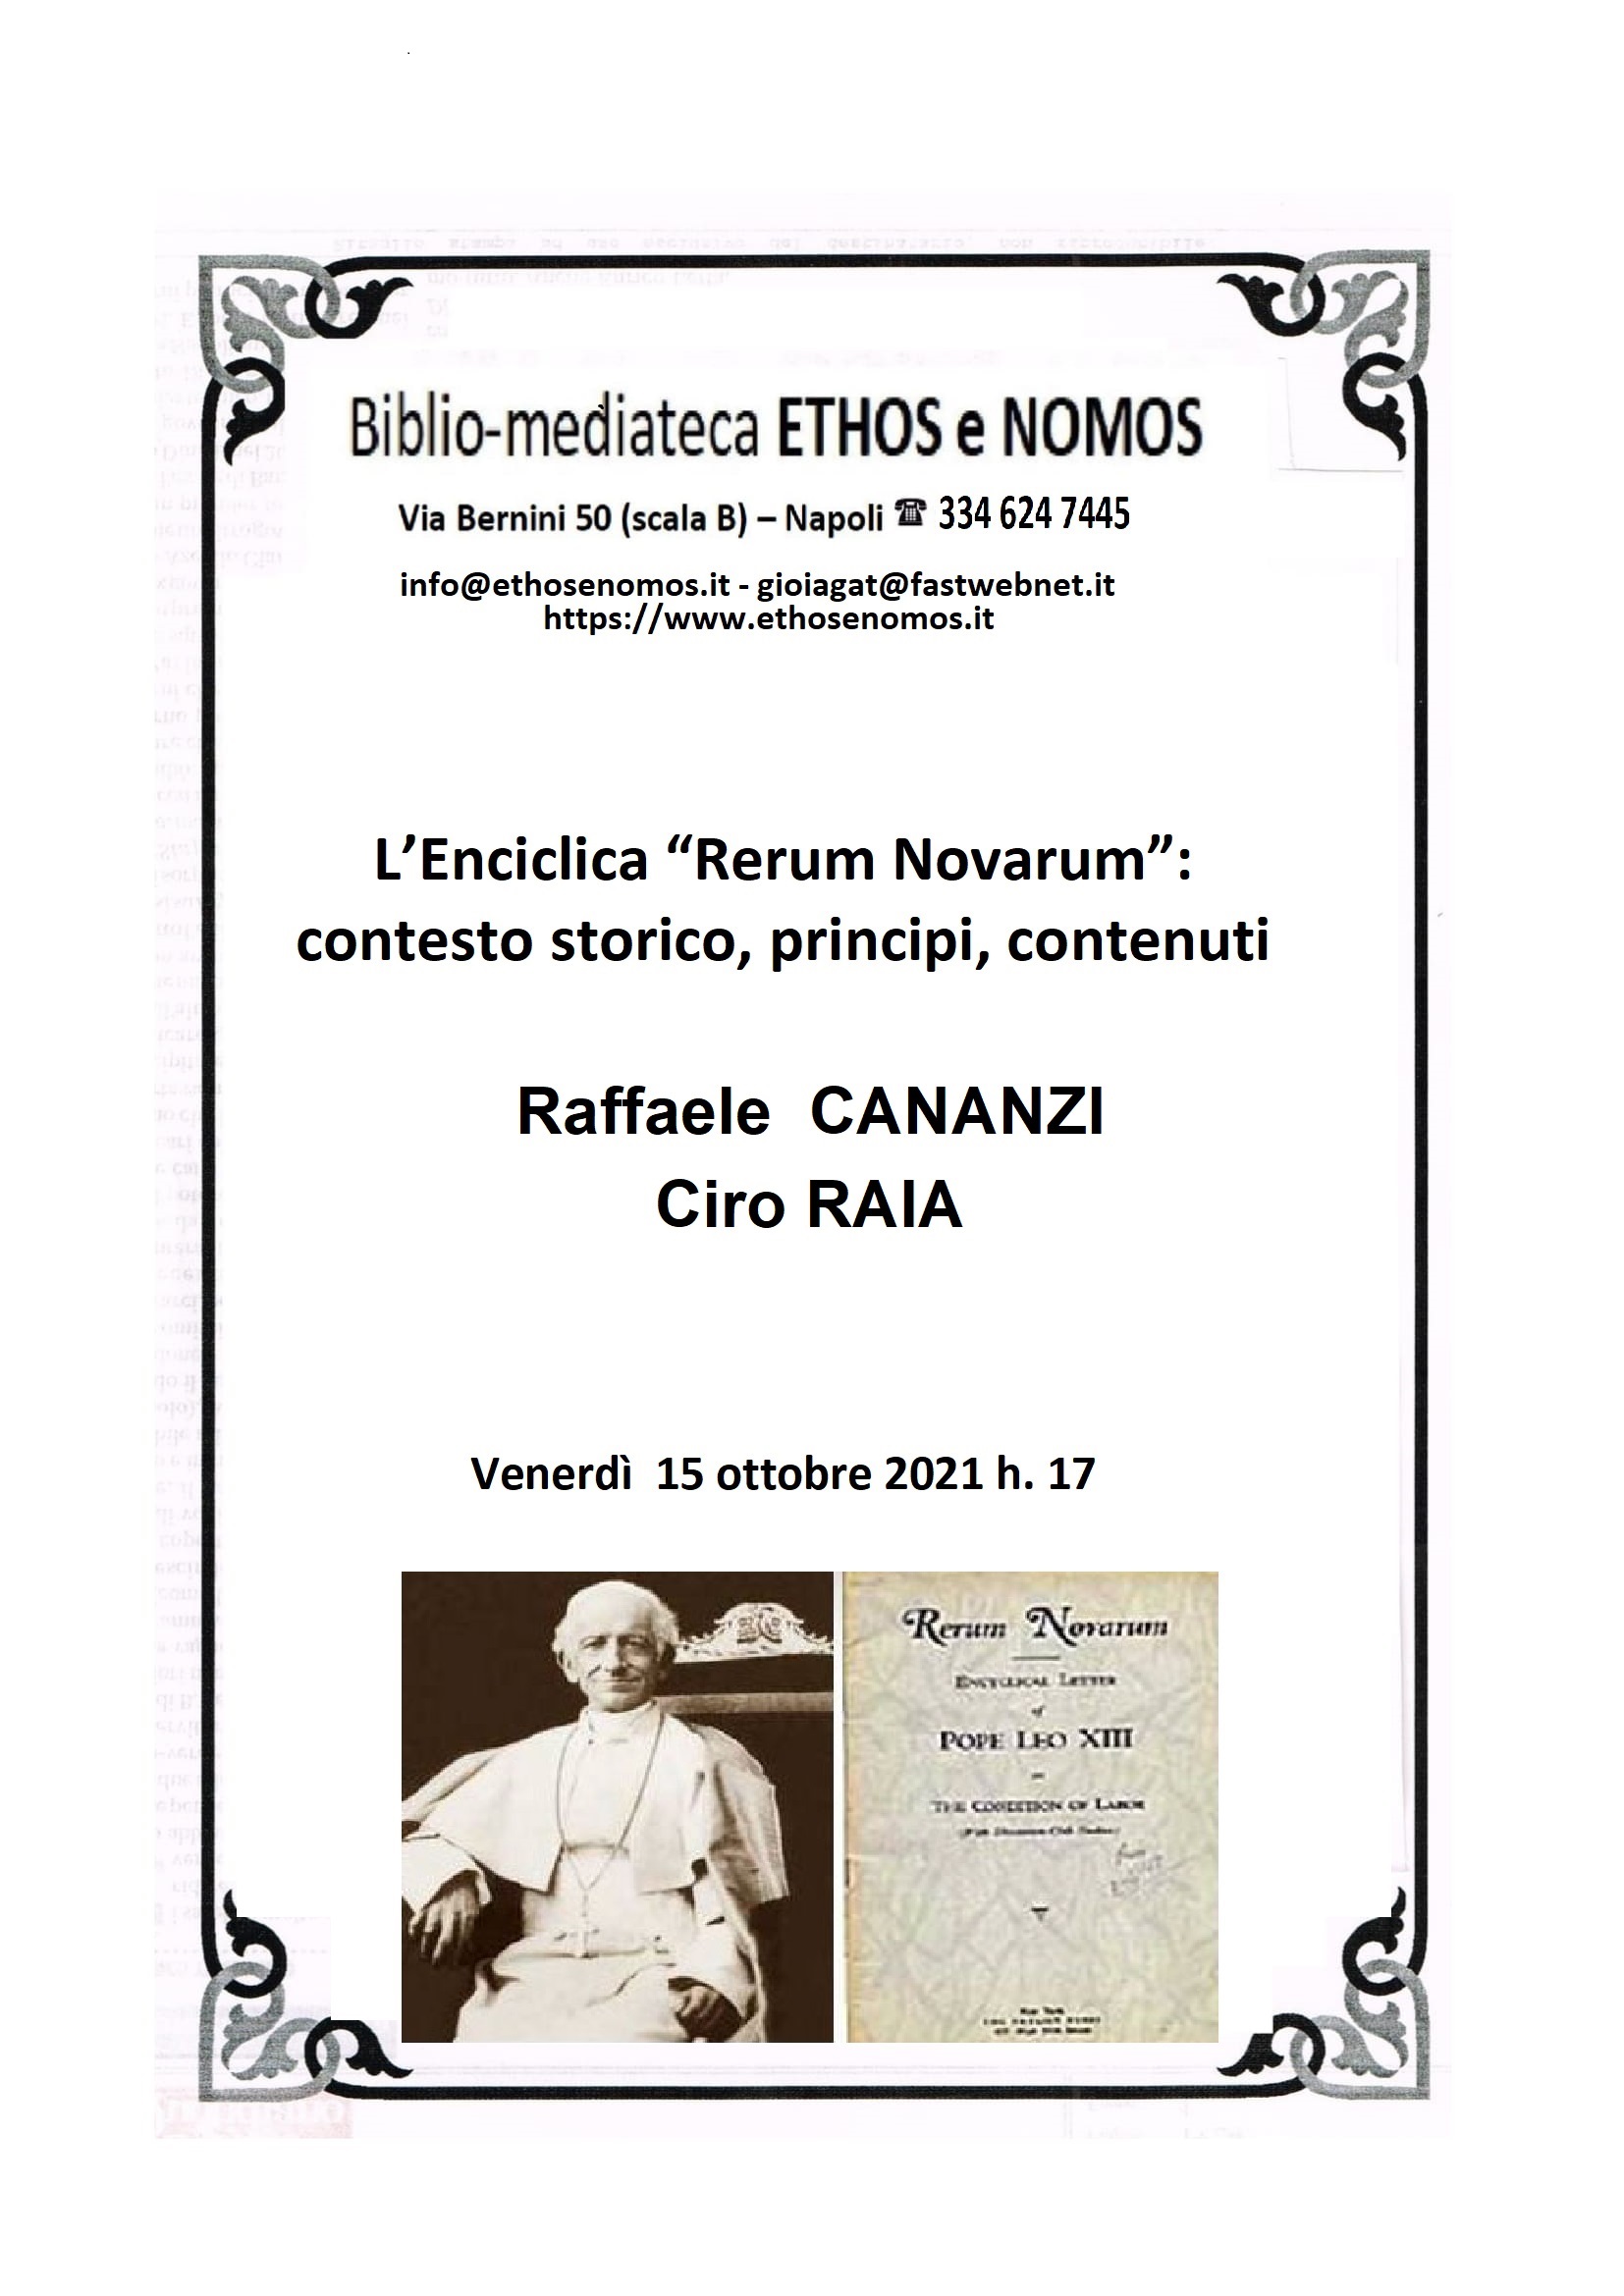 RAFFAELE CANANZI - CIRO RAIA: L'enciclica "Rerum novarum", contesto storico, principi, contenuti